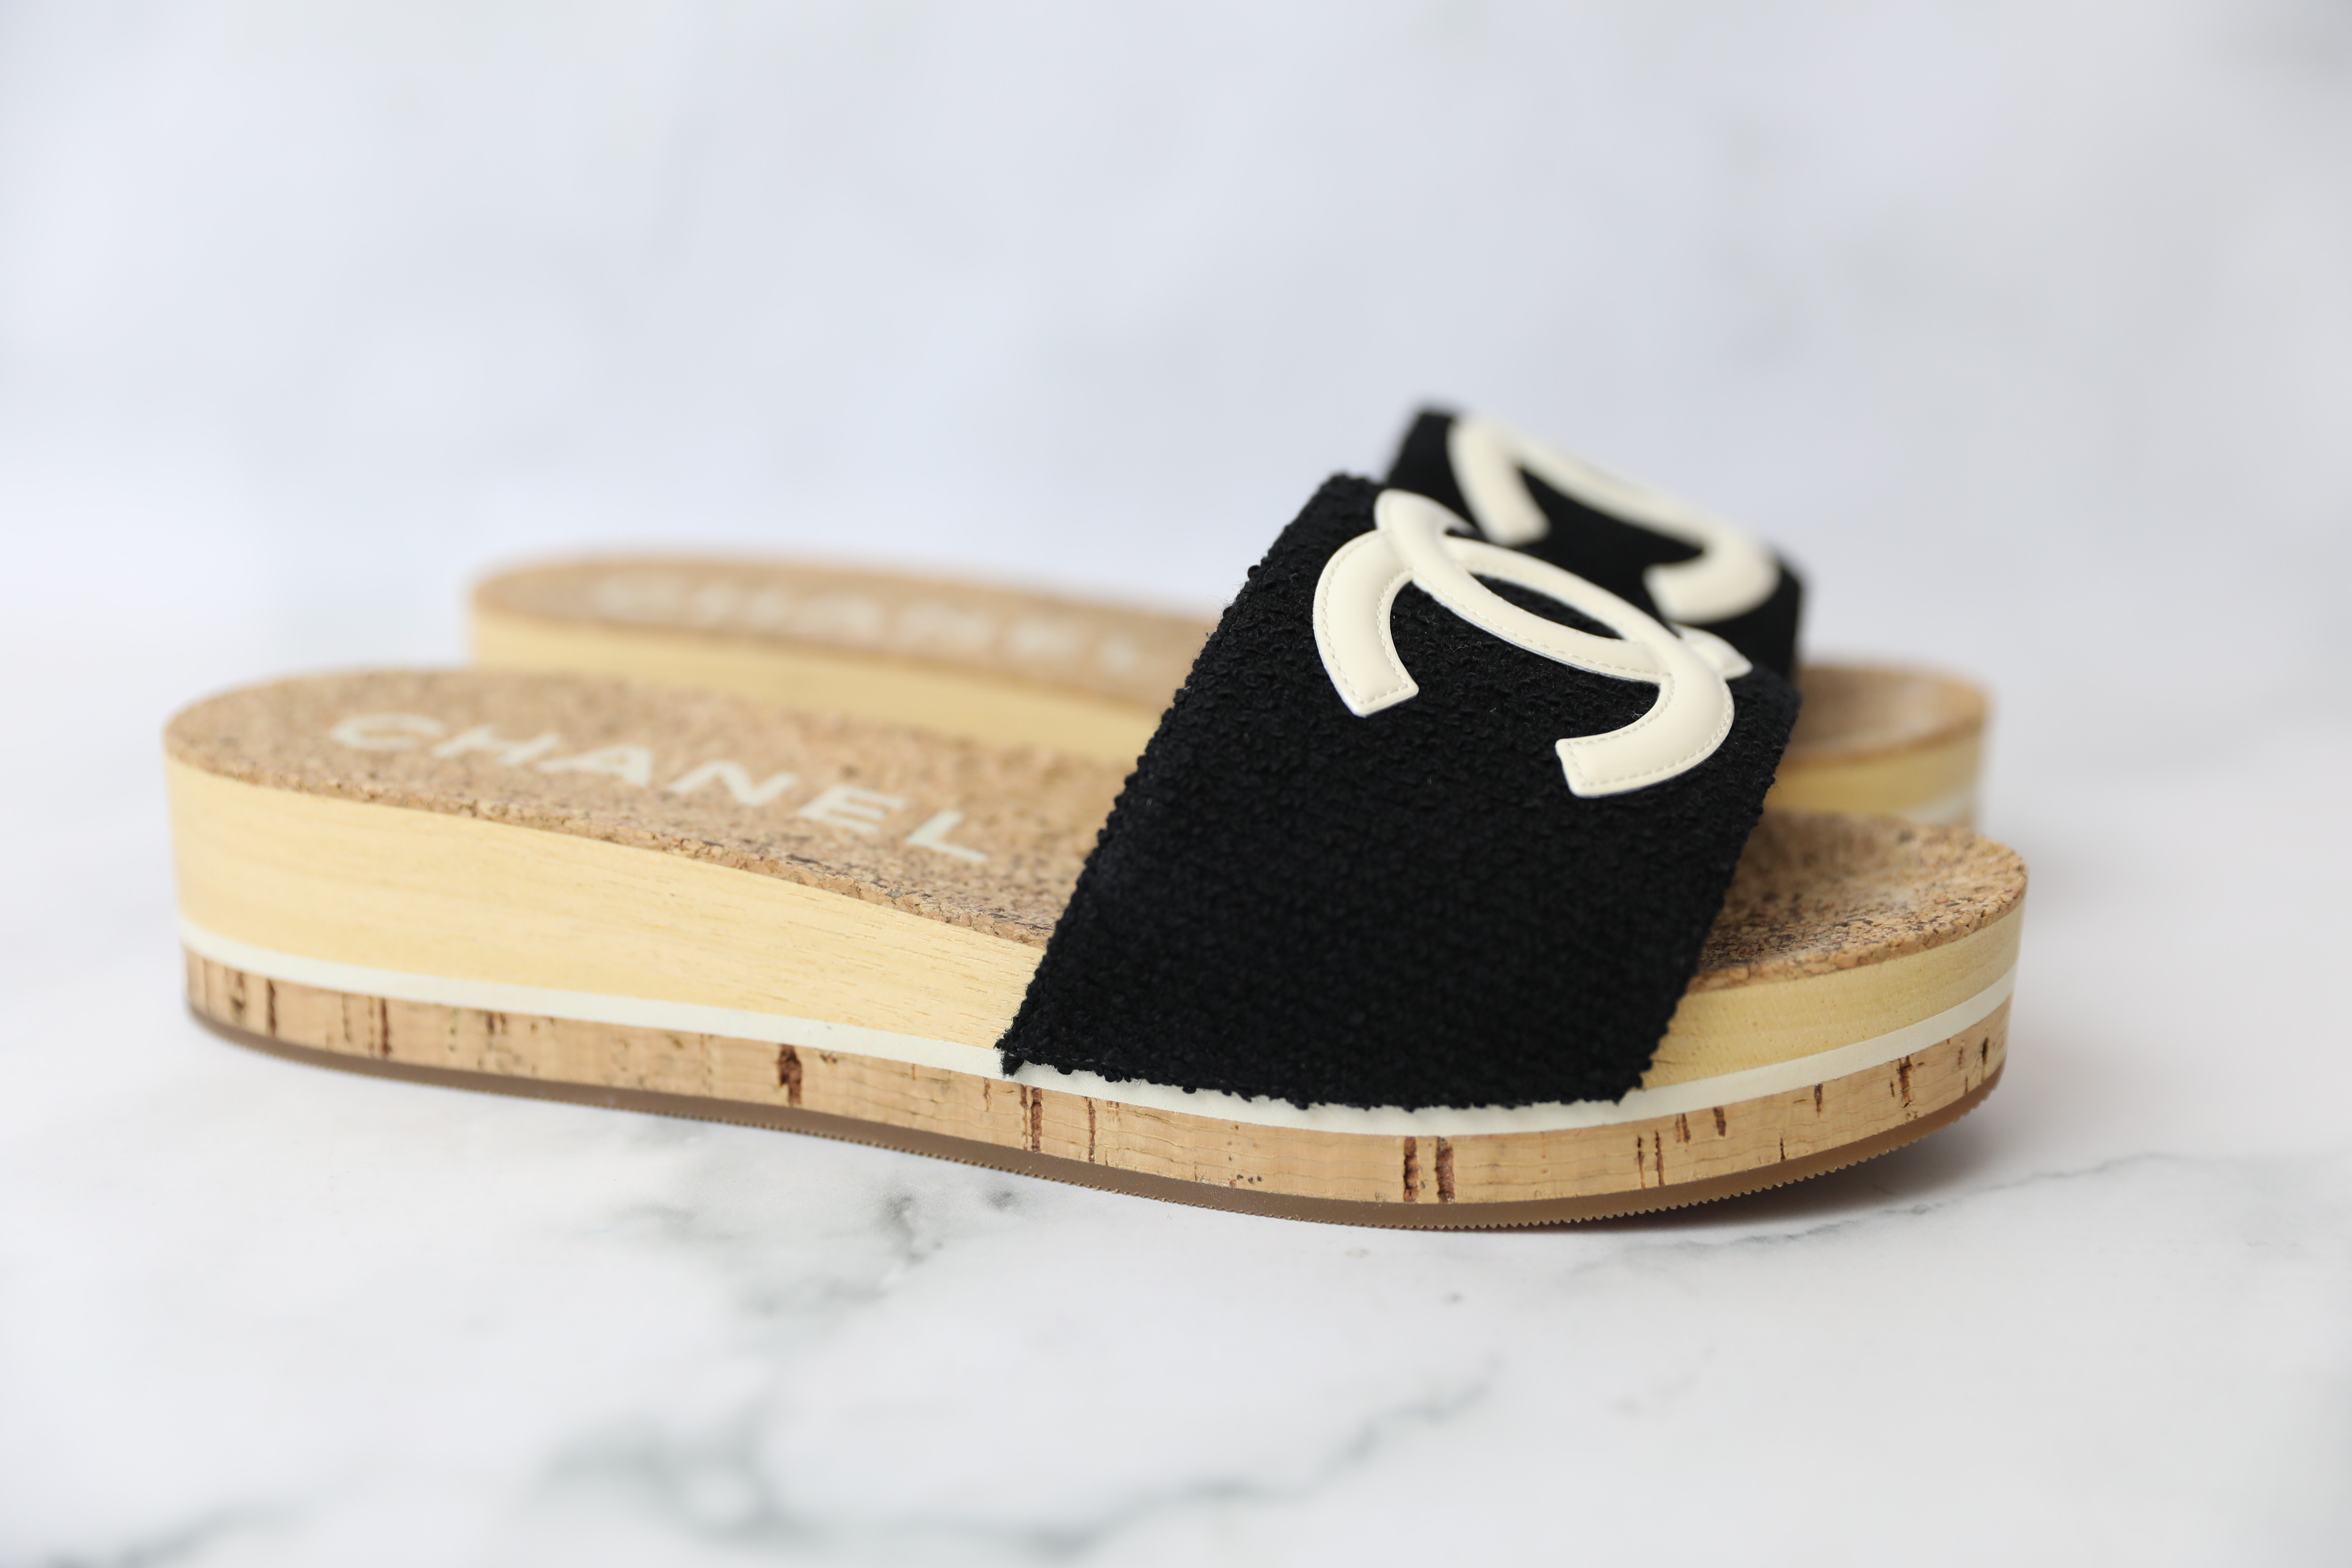 💯% Authentic Chanel Cork Mule Sandal Suede Leather Beige CC Black Spring  Summer Size 38